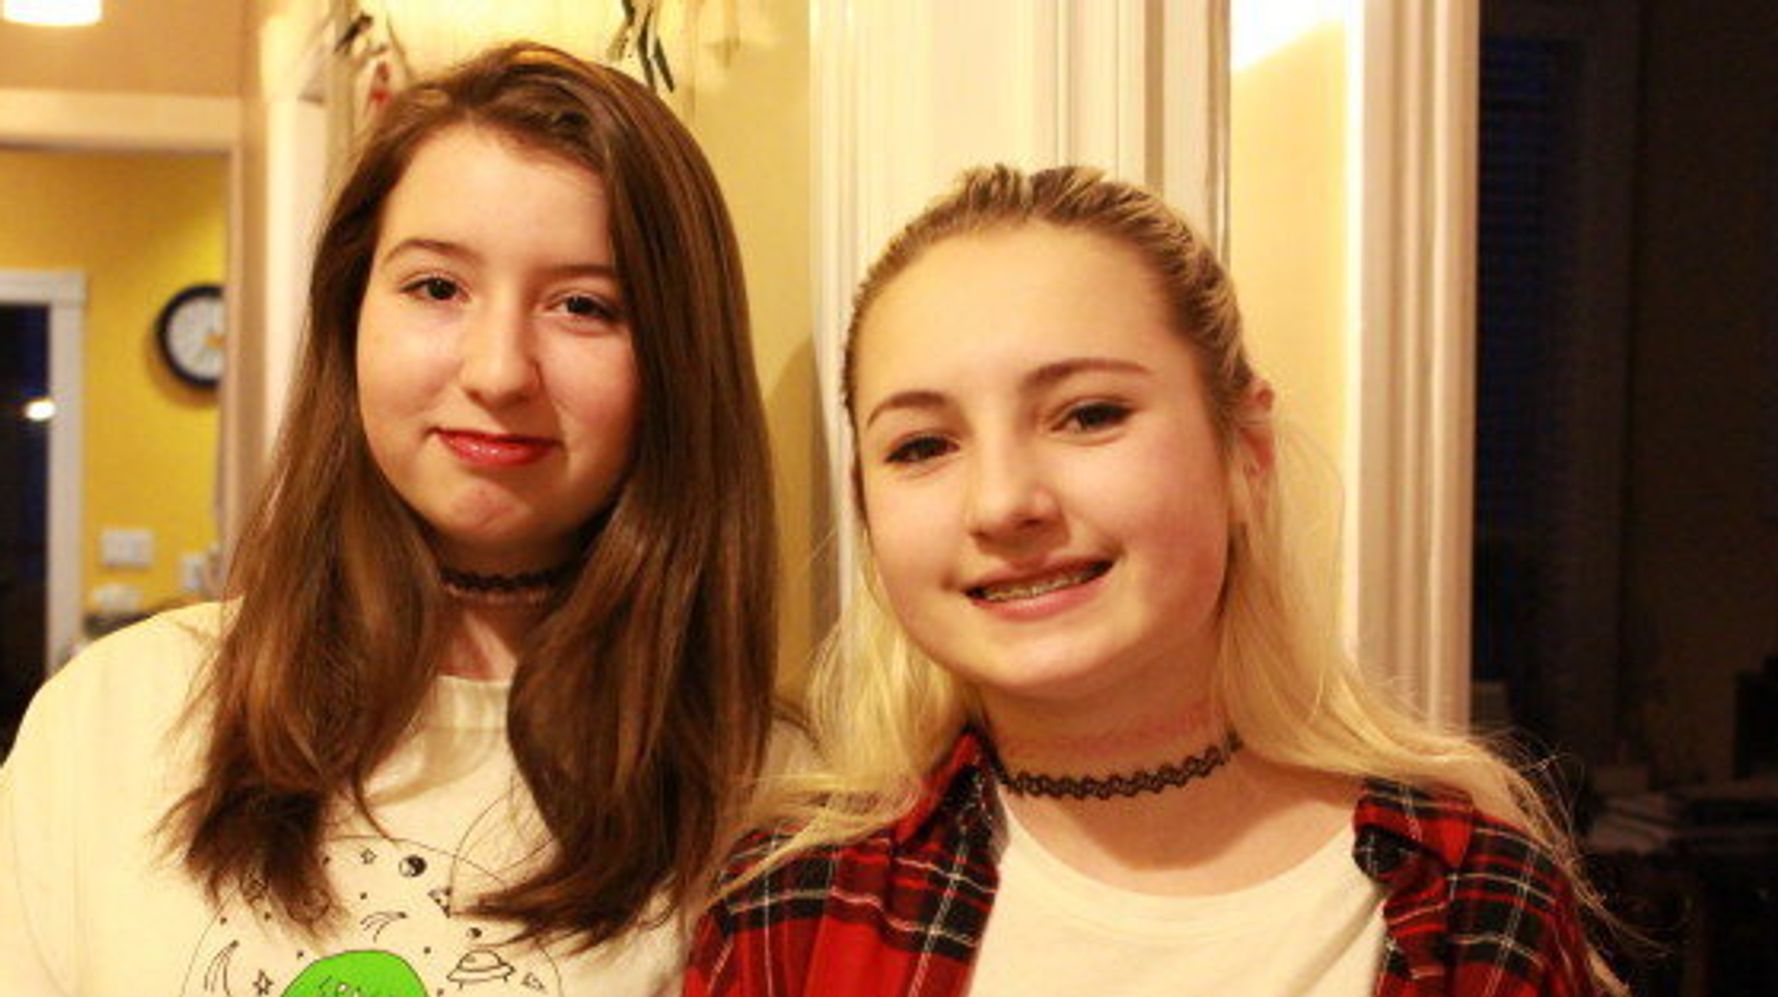 Teen Consent Activists Tessa Hill And Lia Valente Win